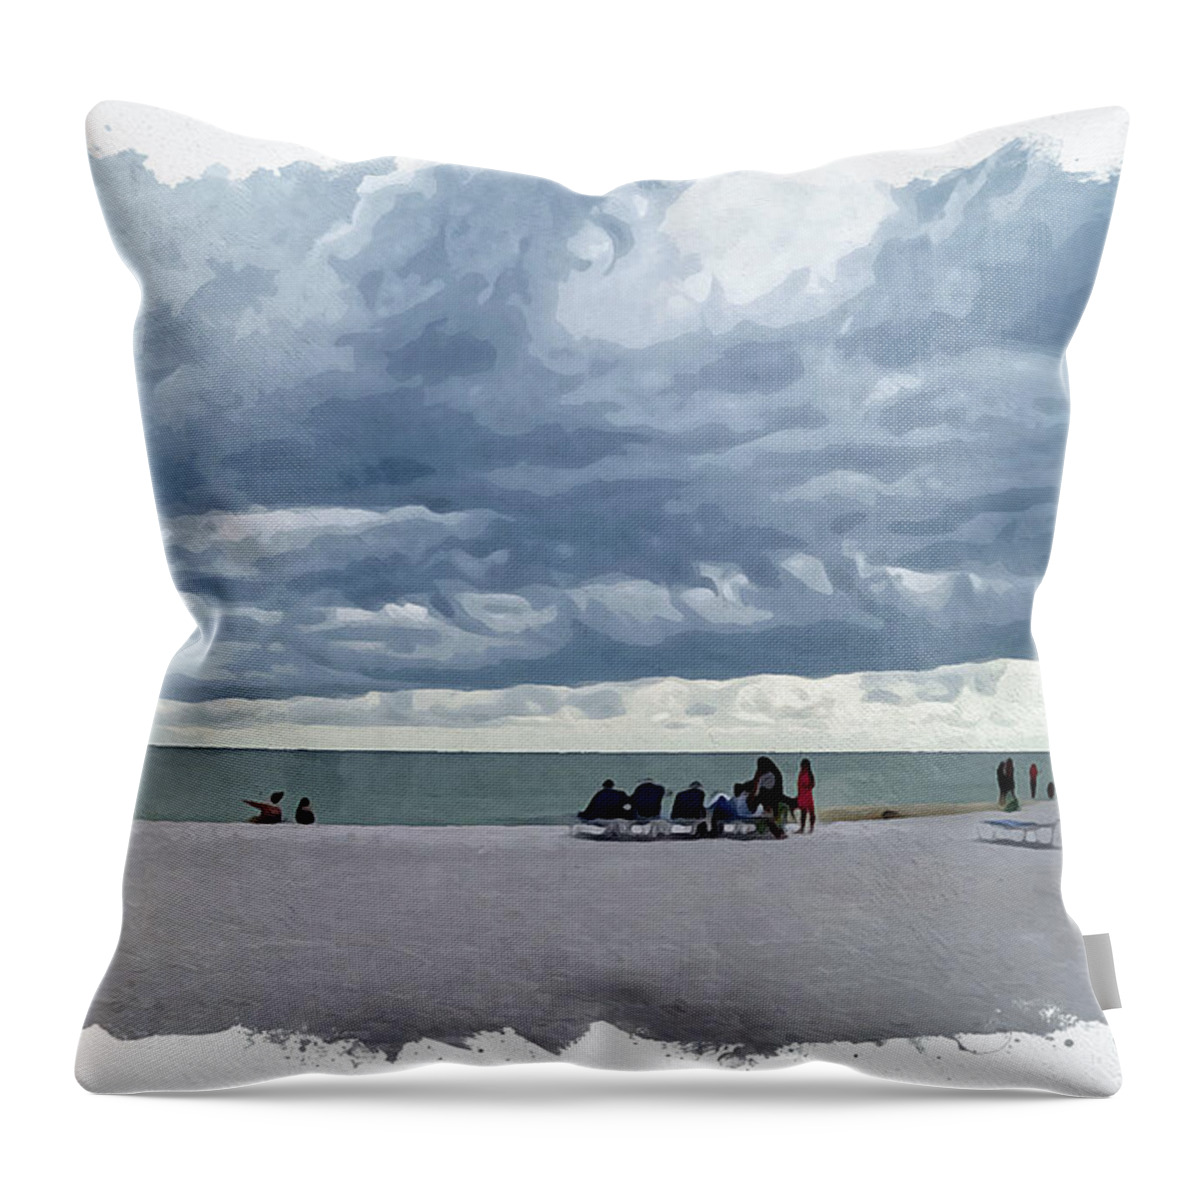  Rain Throw Pillow featuring the digital art St. Pete Beach by Chauncy Holmes